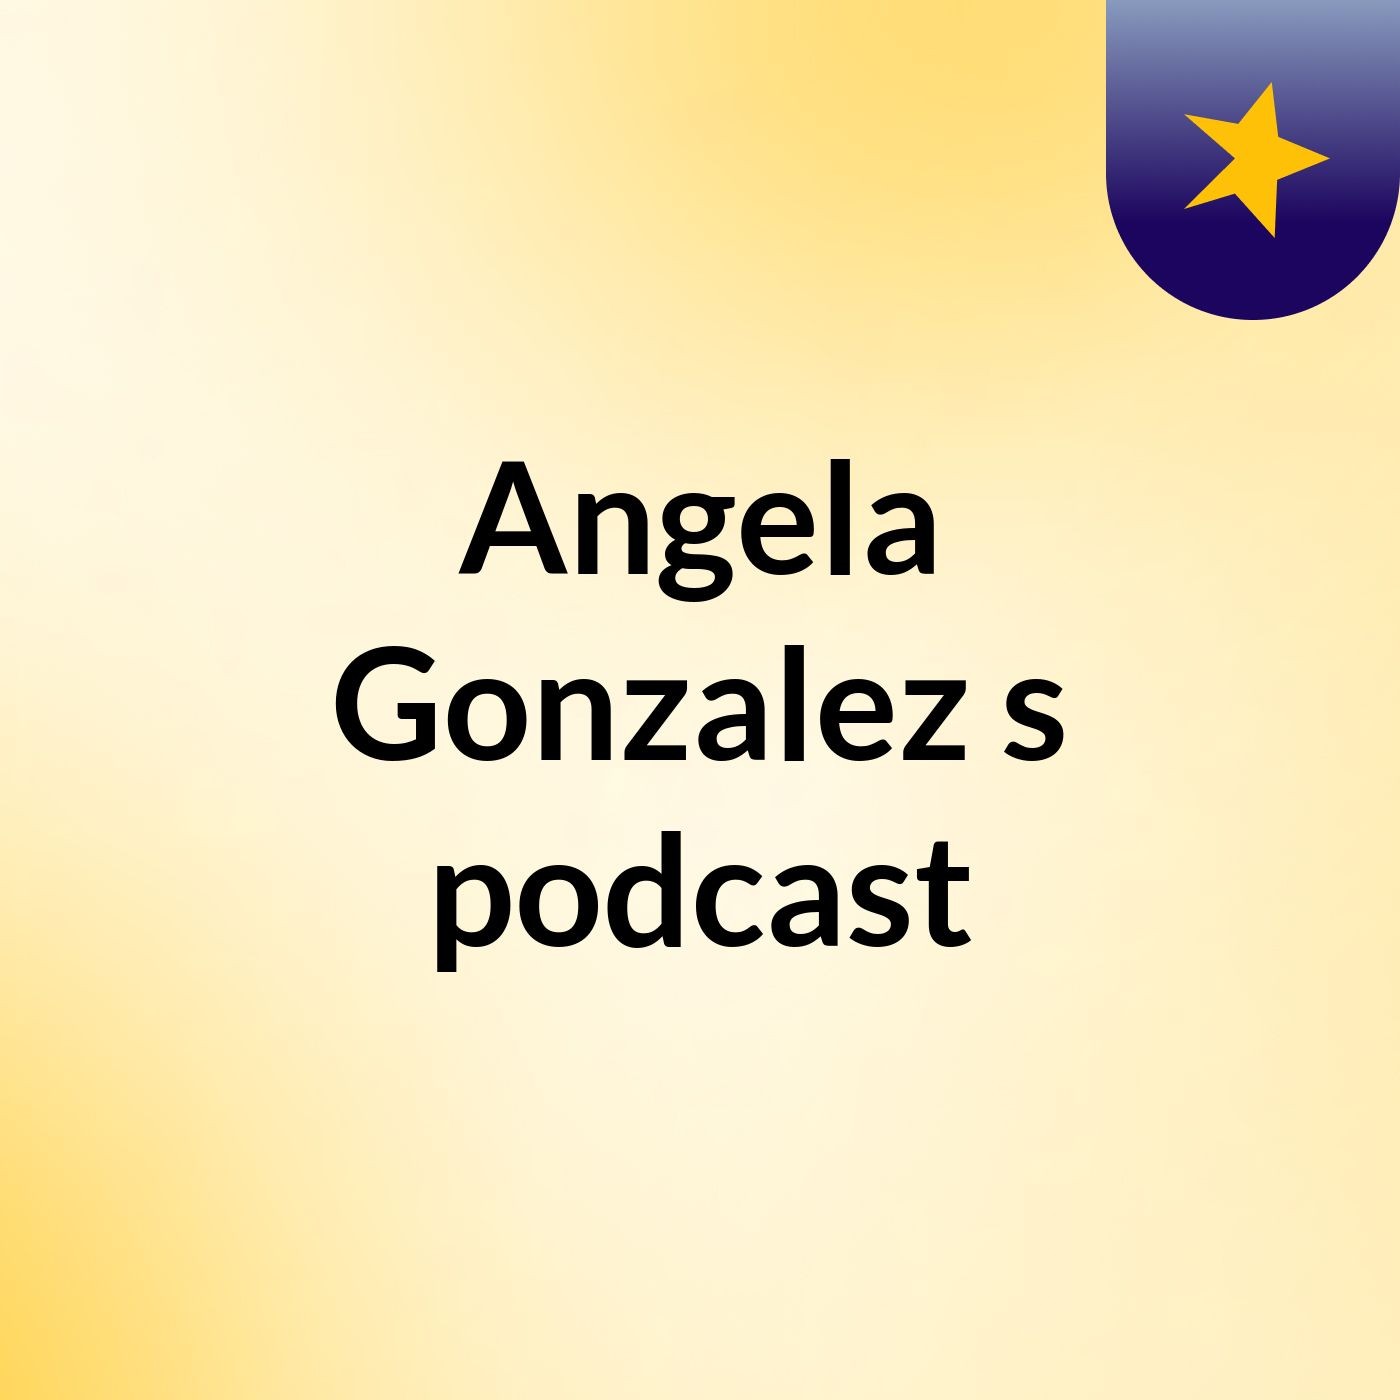 Episode 2 - Angela Gonzalez's podcast